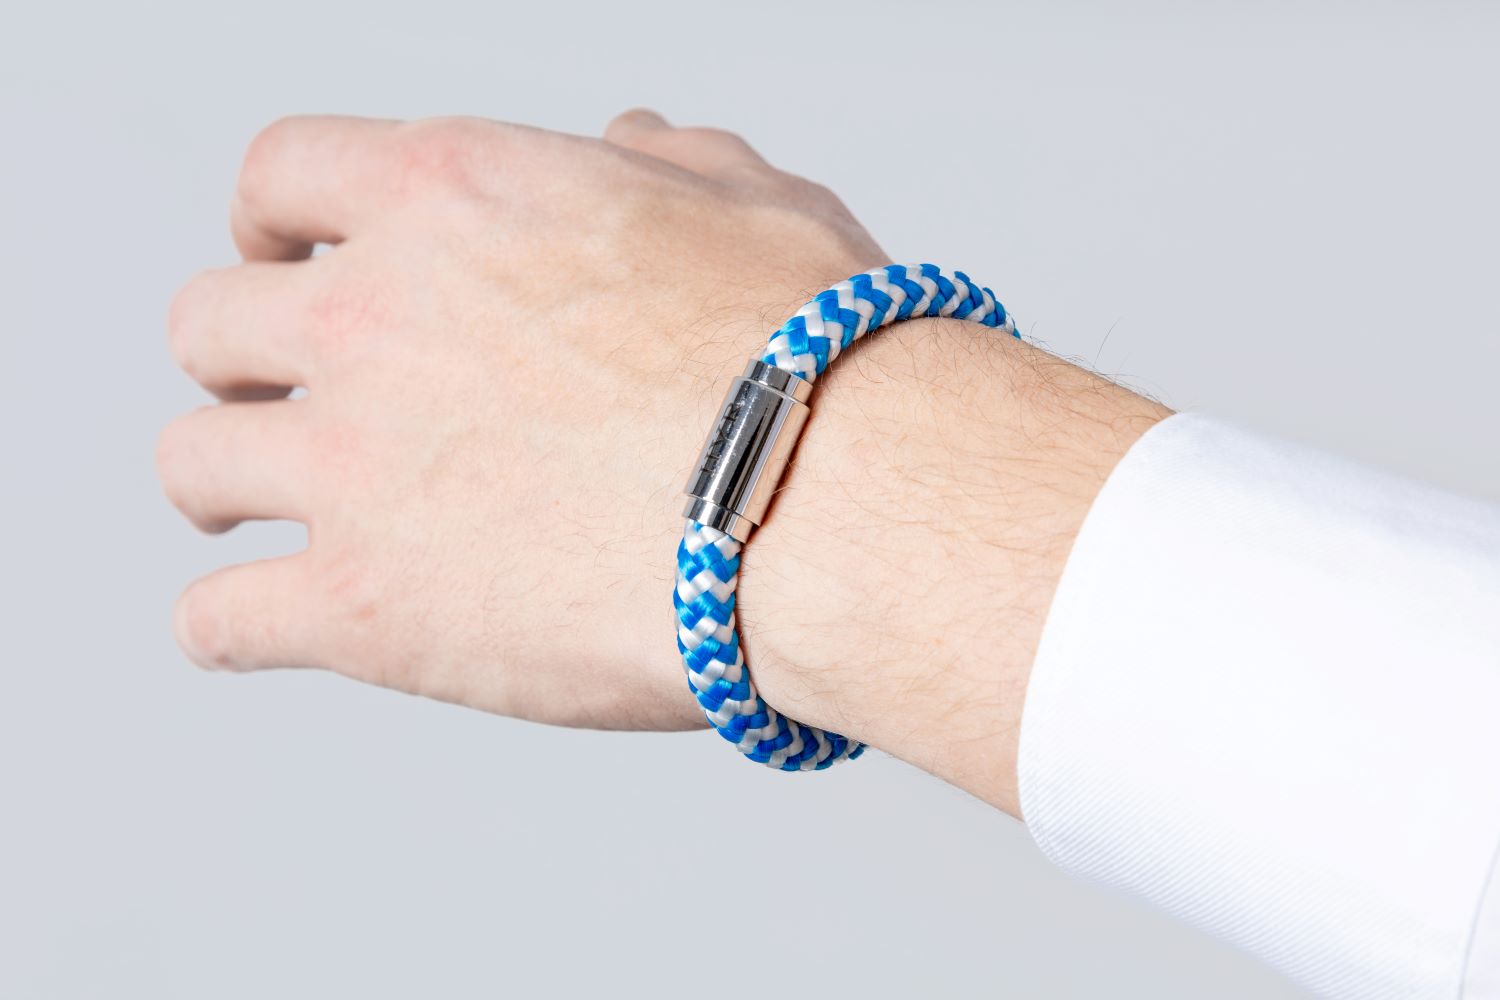 Cloudchaser rope bracelet - silver